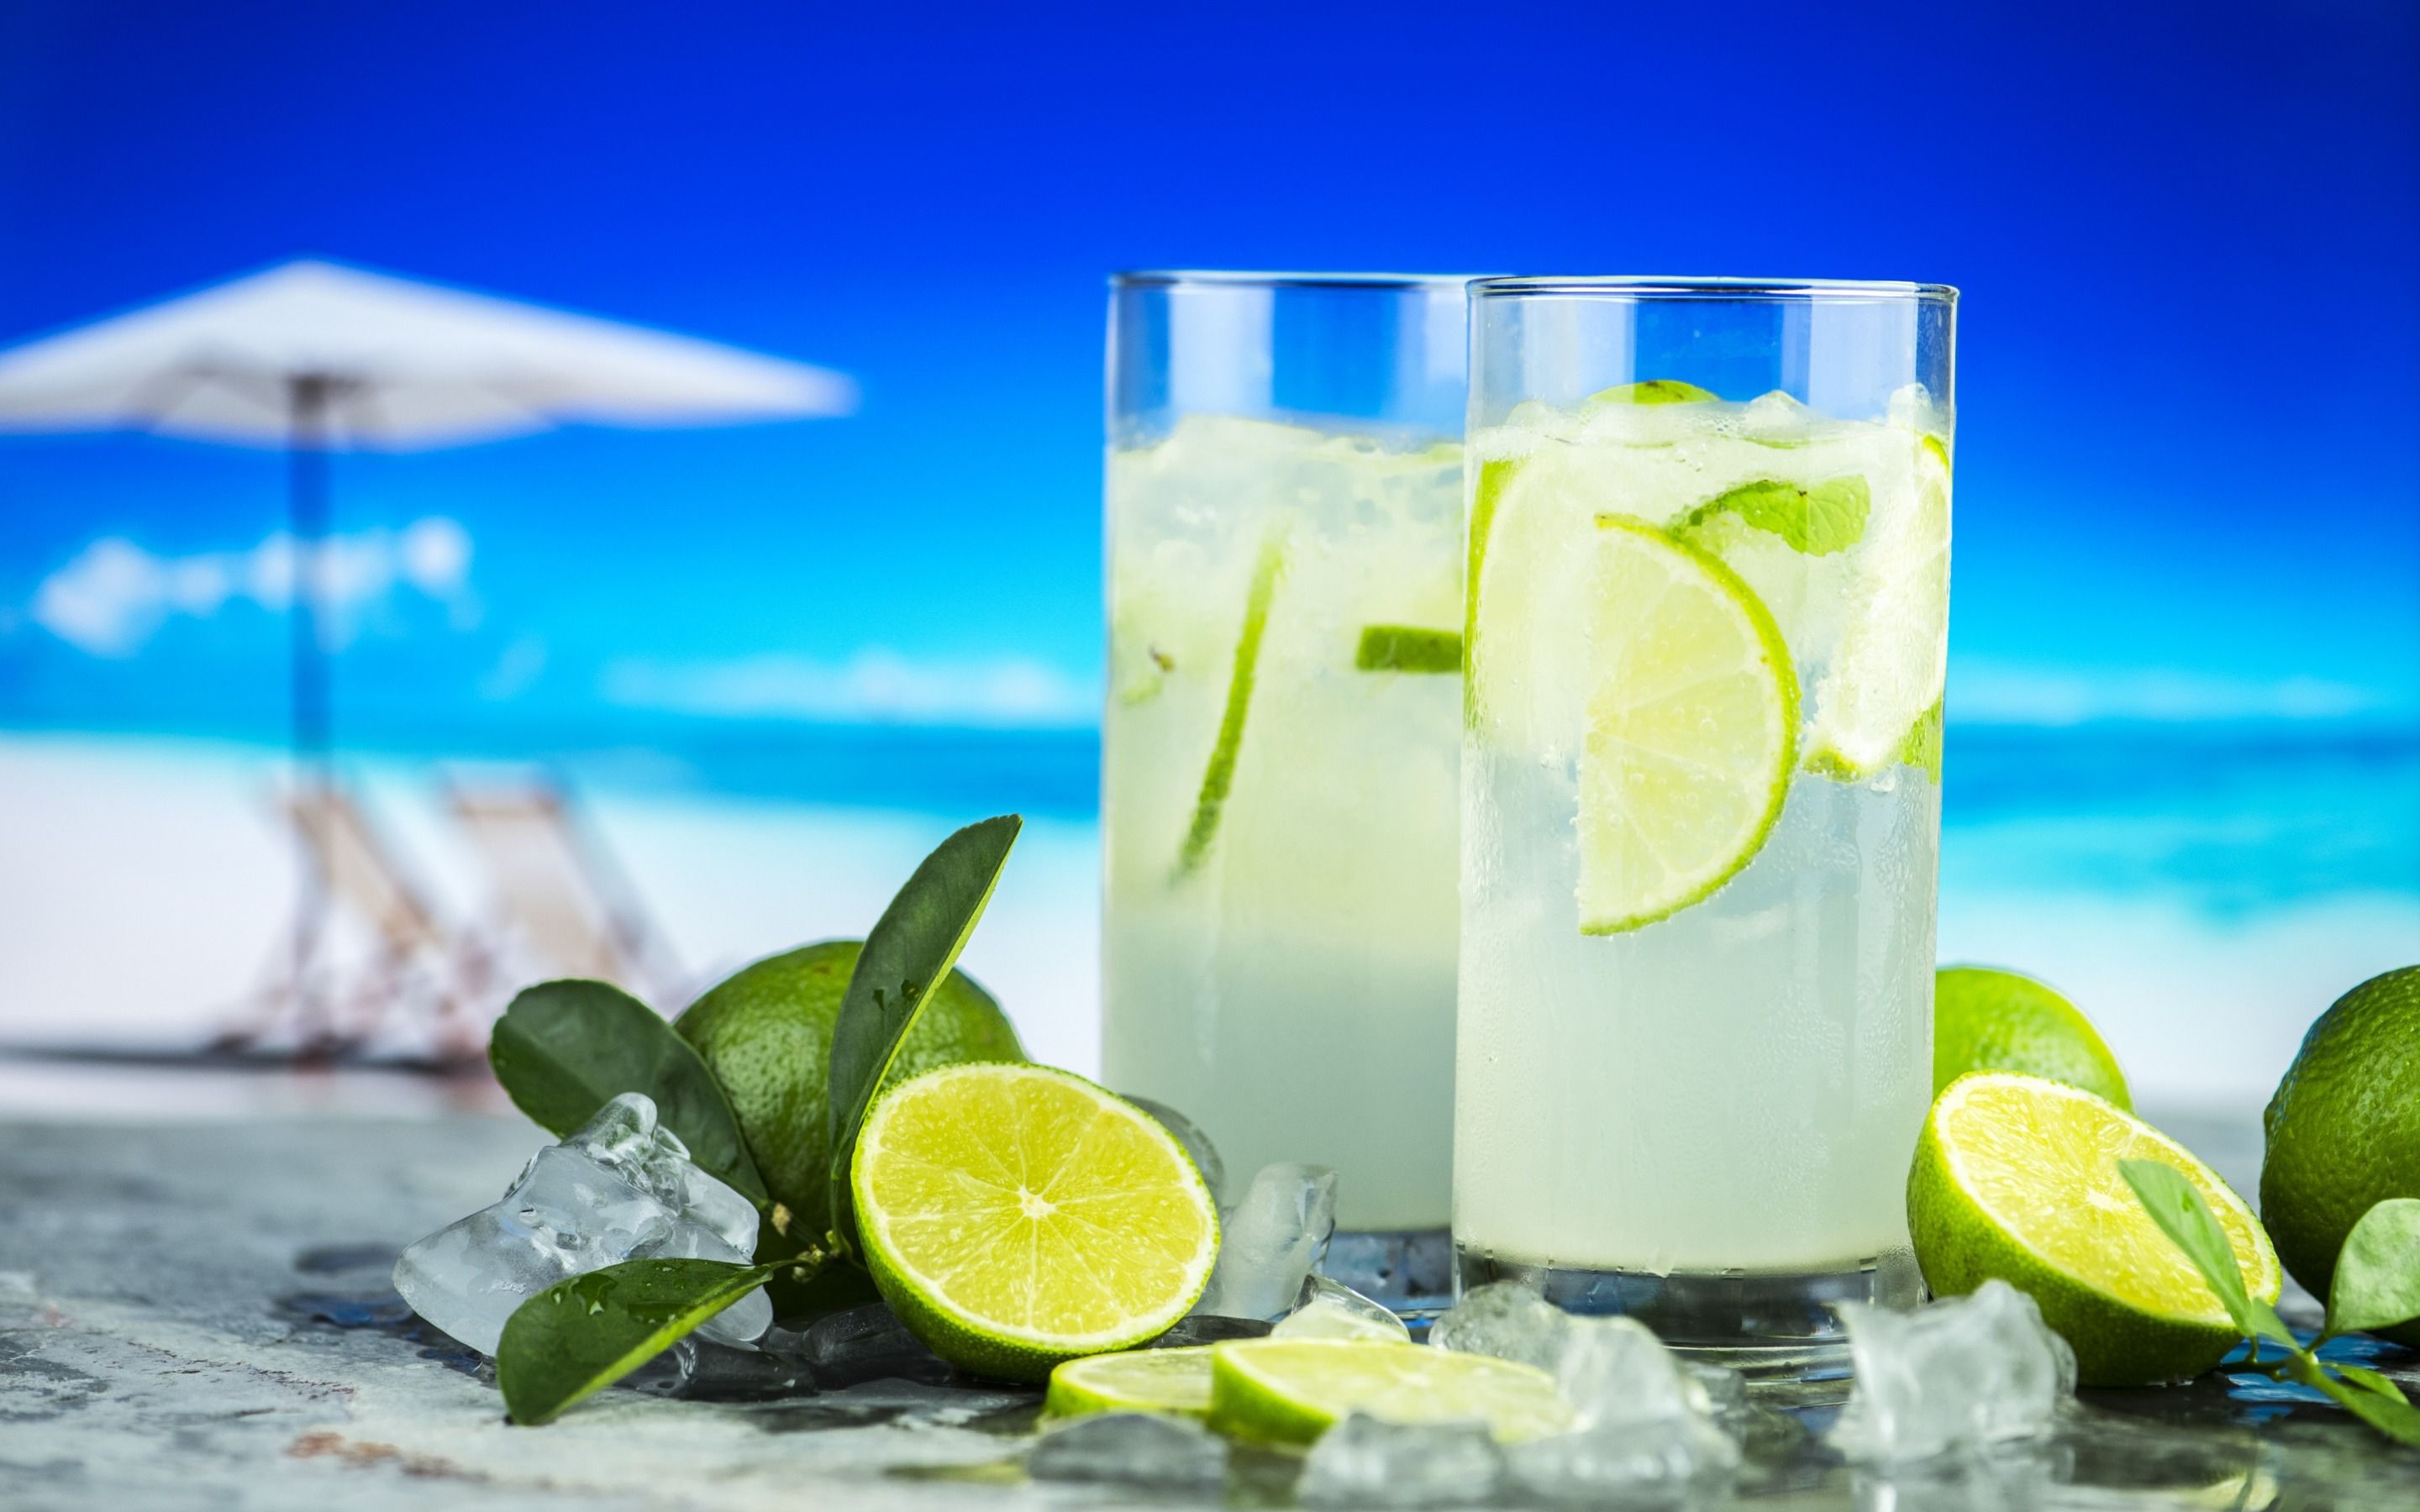 Download wallpaper mojito, summer beach cocktails, lemon lime